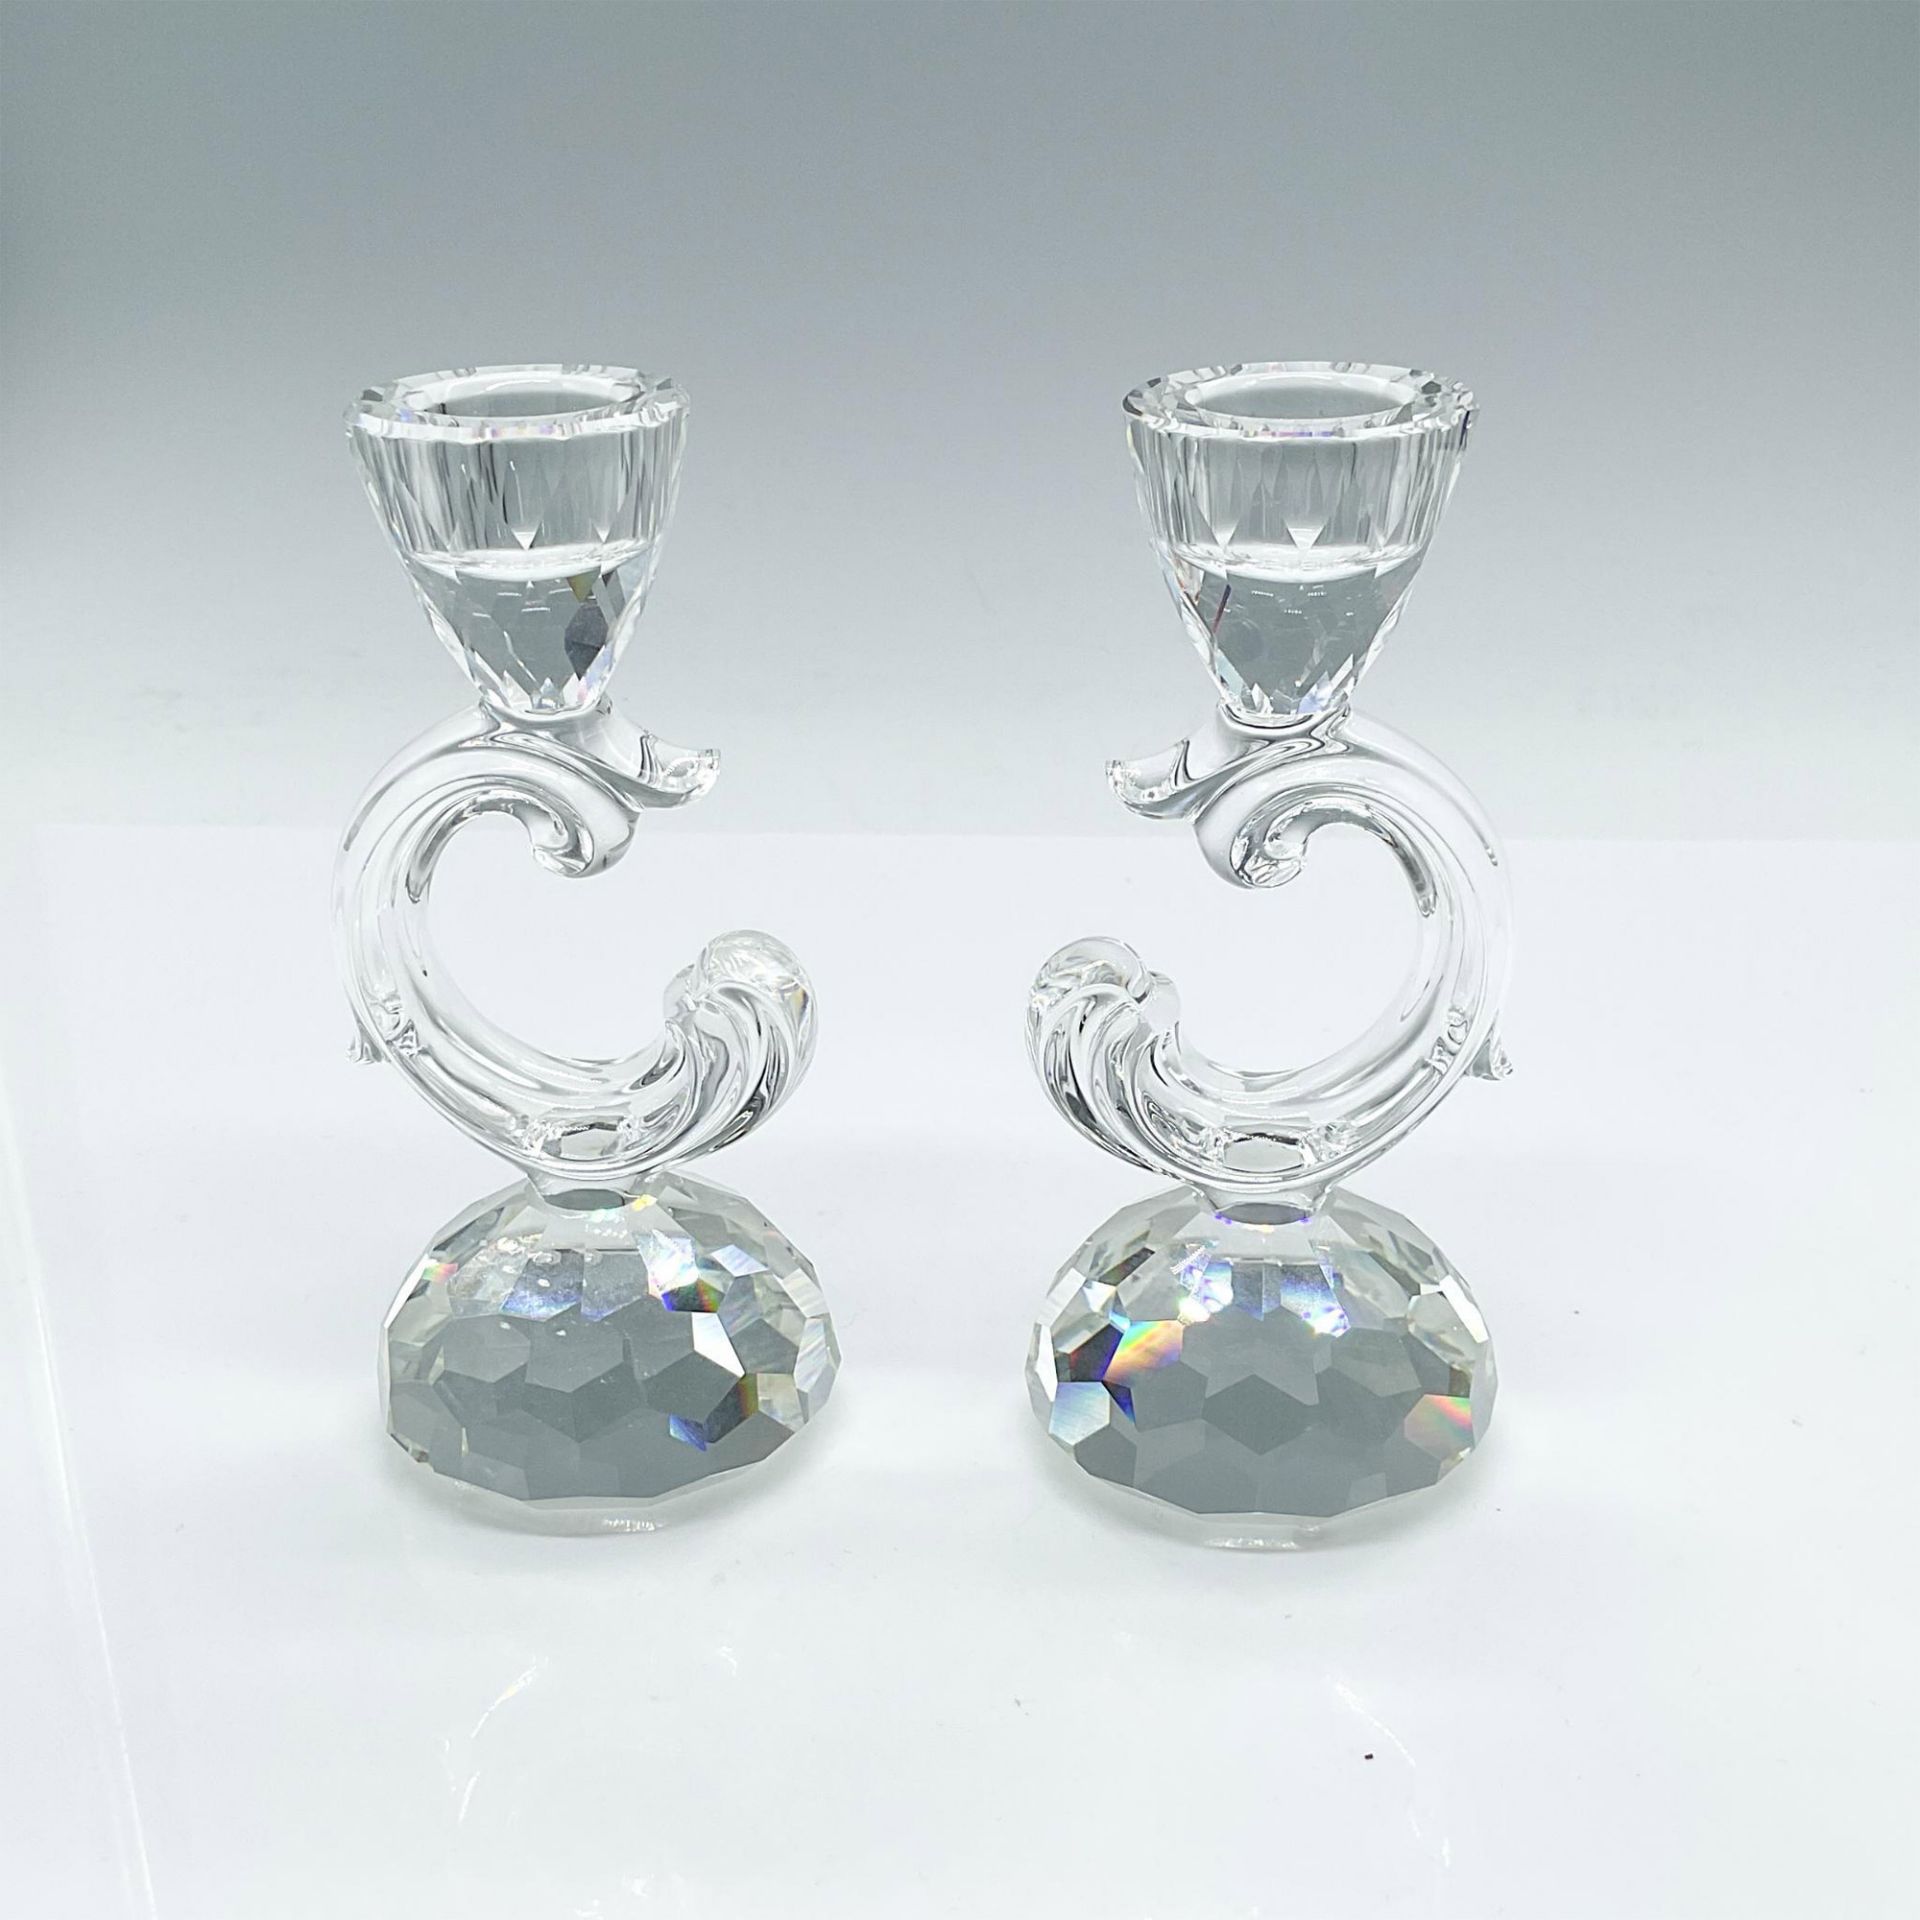 Pair of Swarovski Crystal Candlesticks - Image 2 of 4